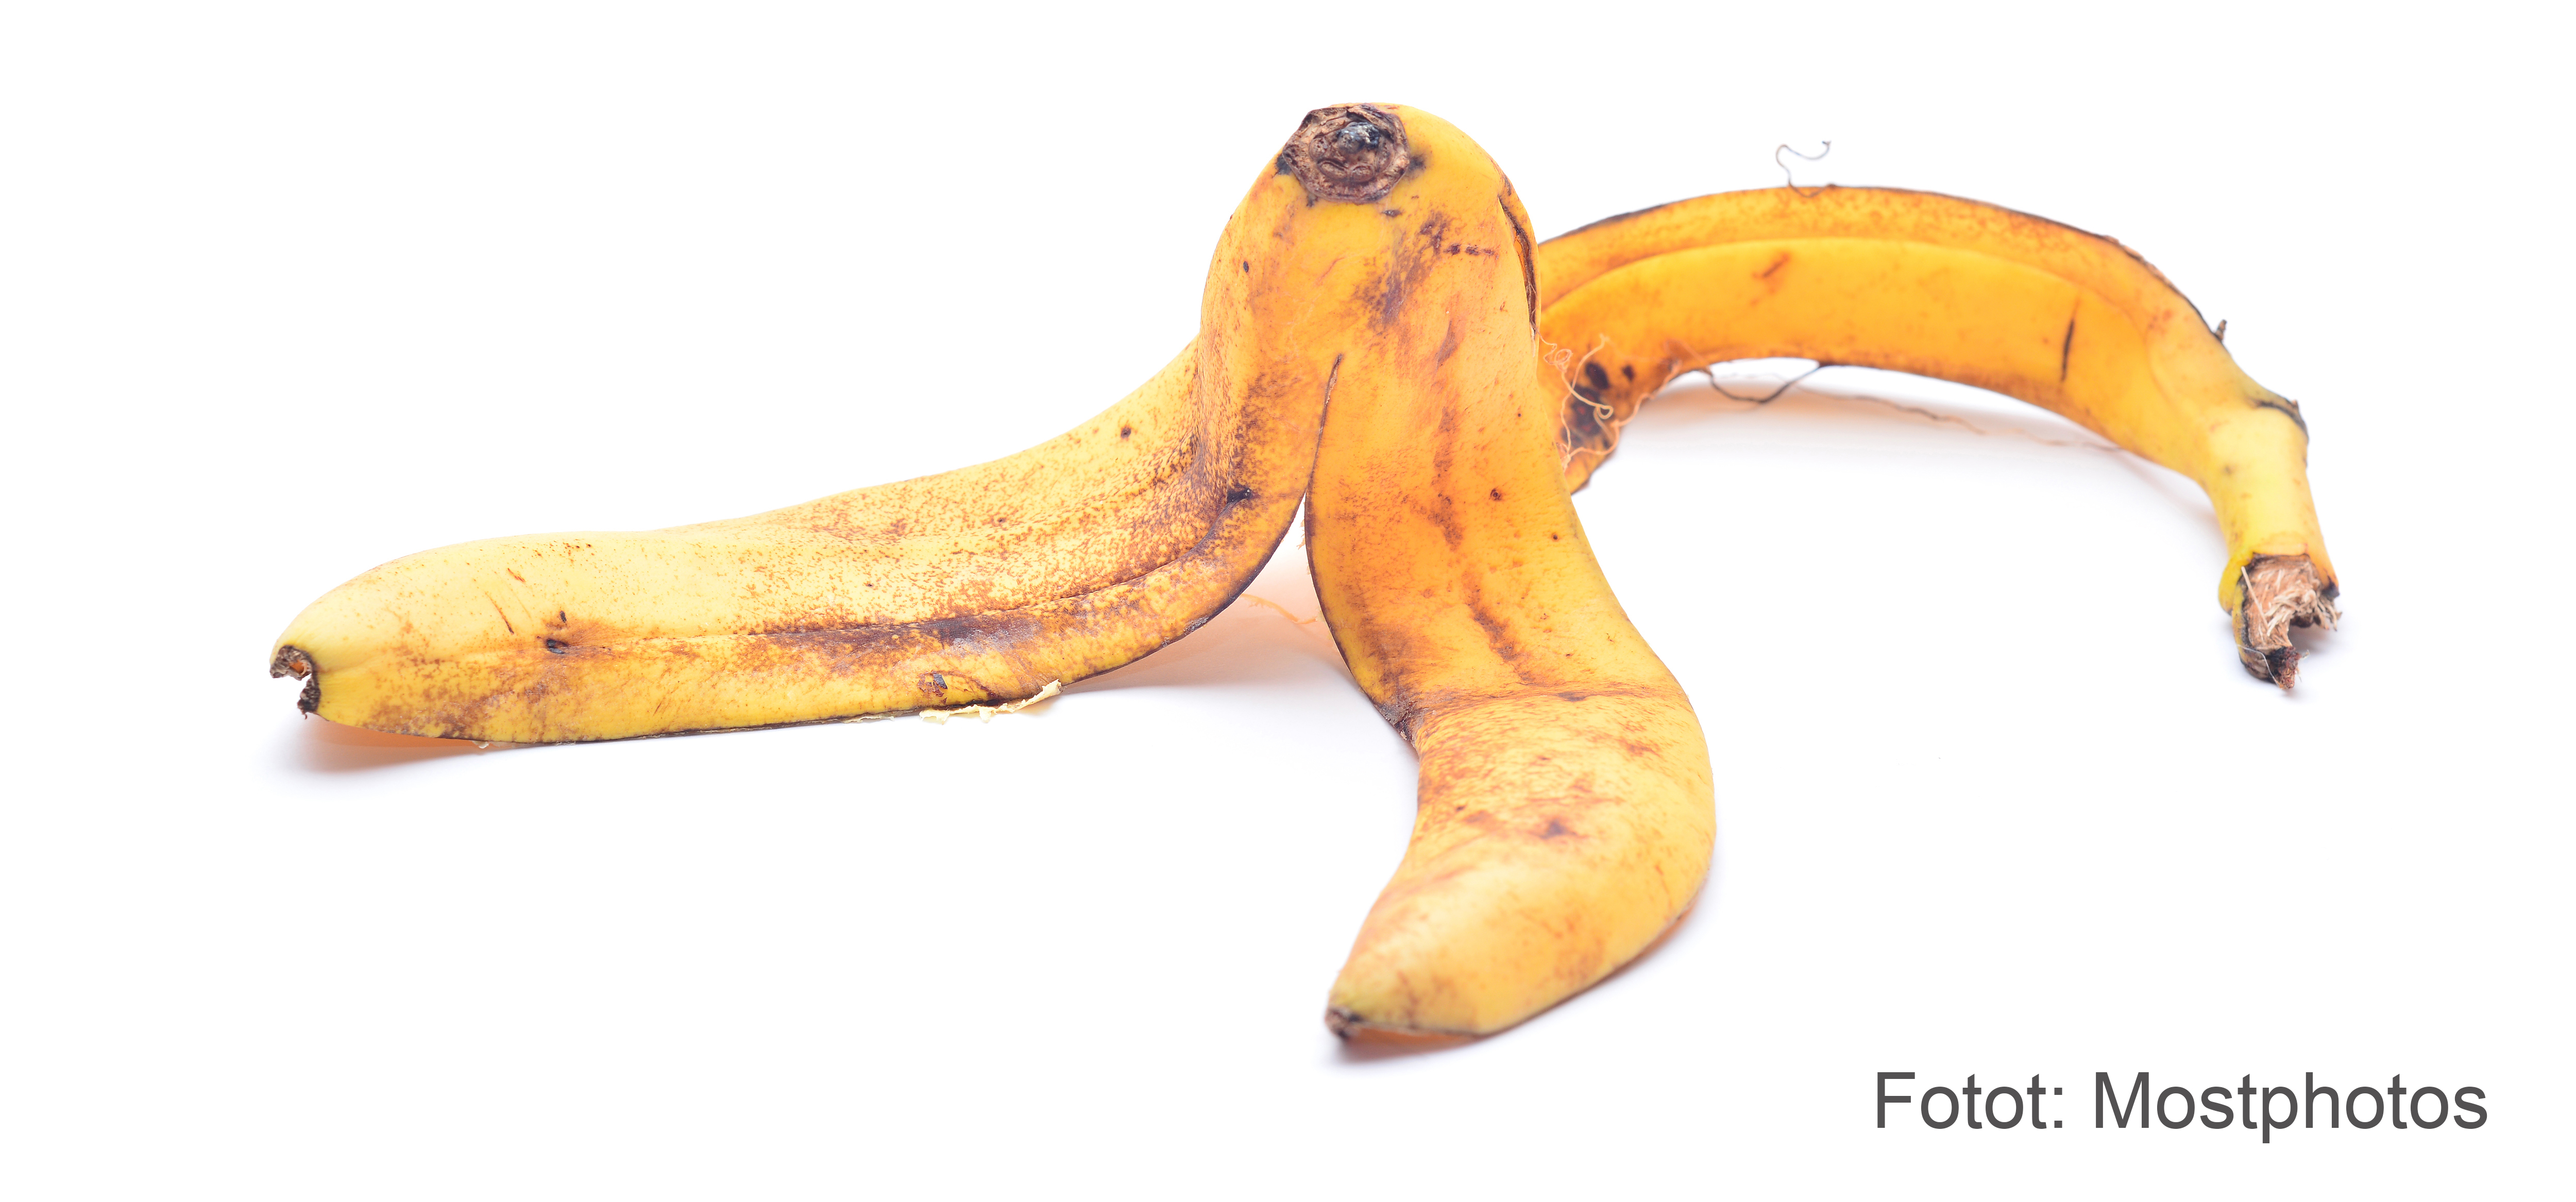 Вес 1 банана без кожуры. Испорченный банан. Мягкая игрушка банан с кожурой. Банановая кожура под микроскопом. Сухая кожура банана на белом фоне.